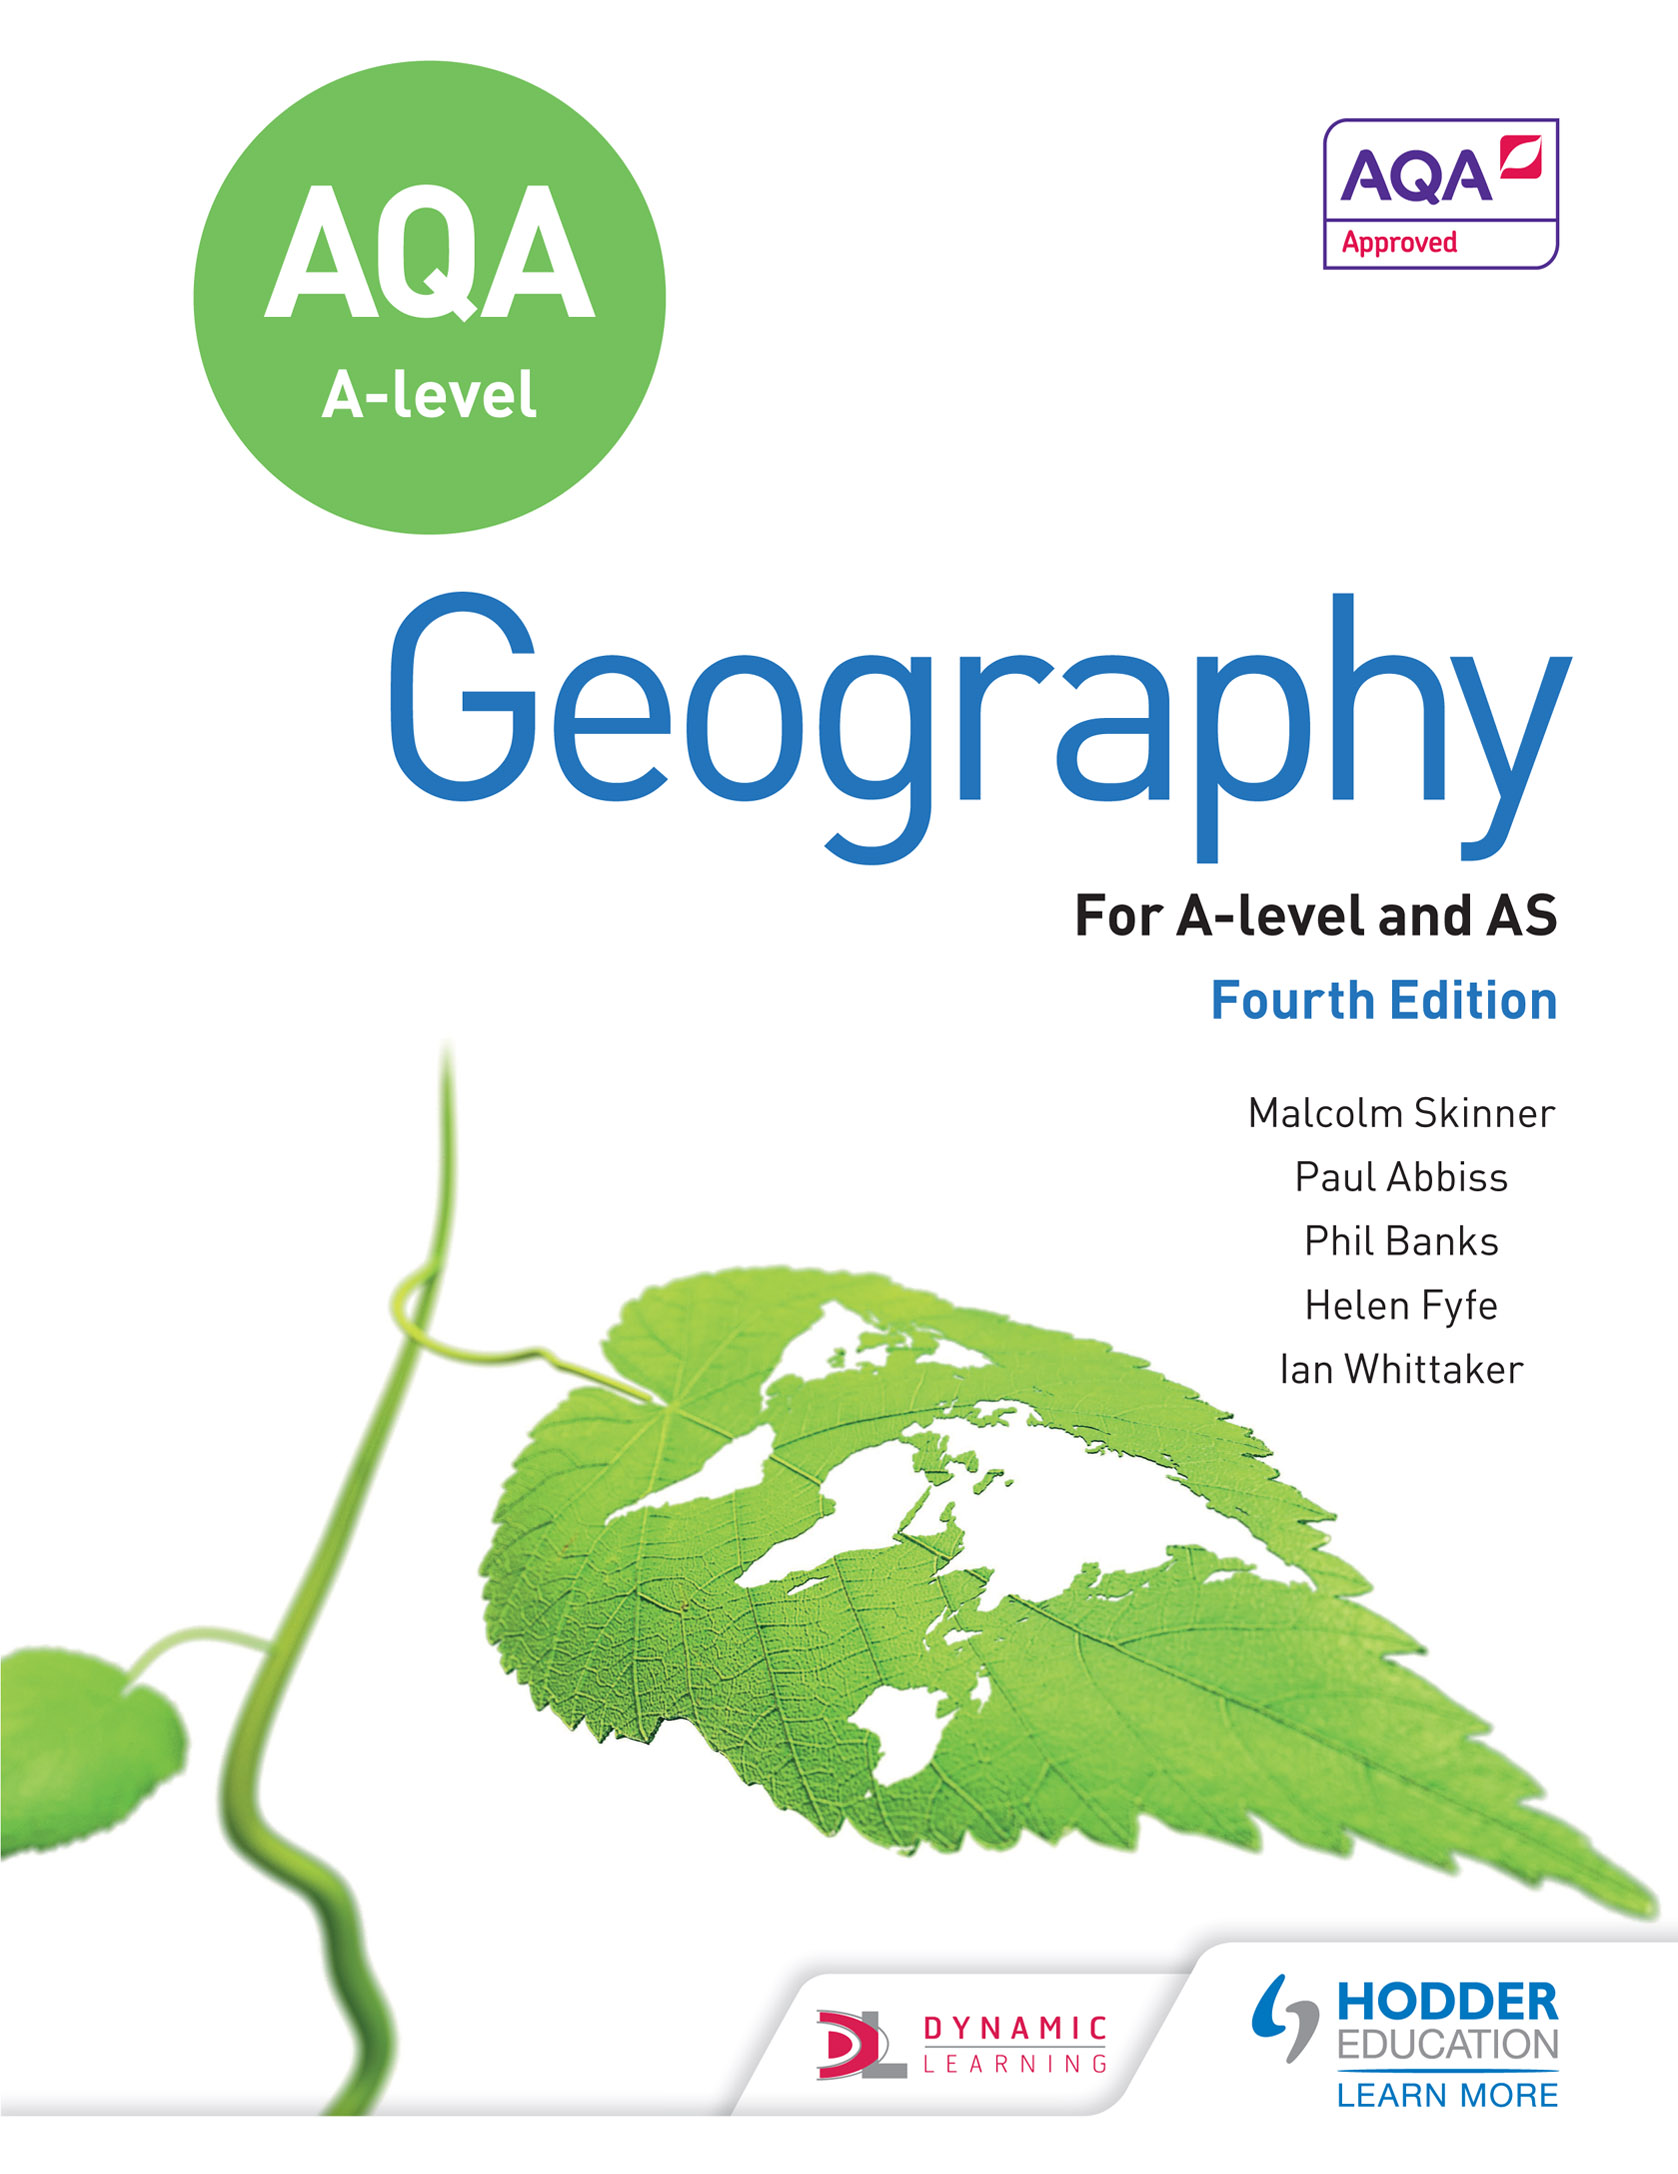 [DESCATALOGADO] AQA A Level Geography Fourth Edition